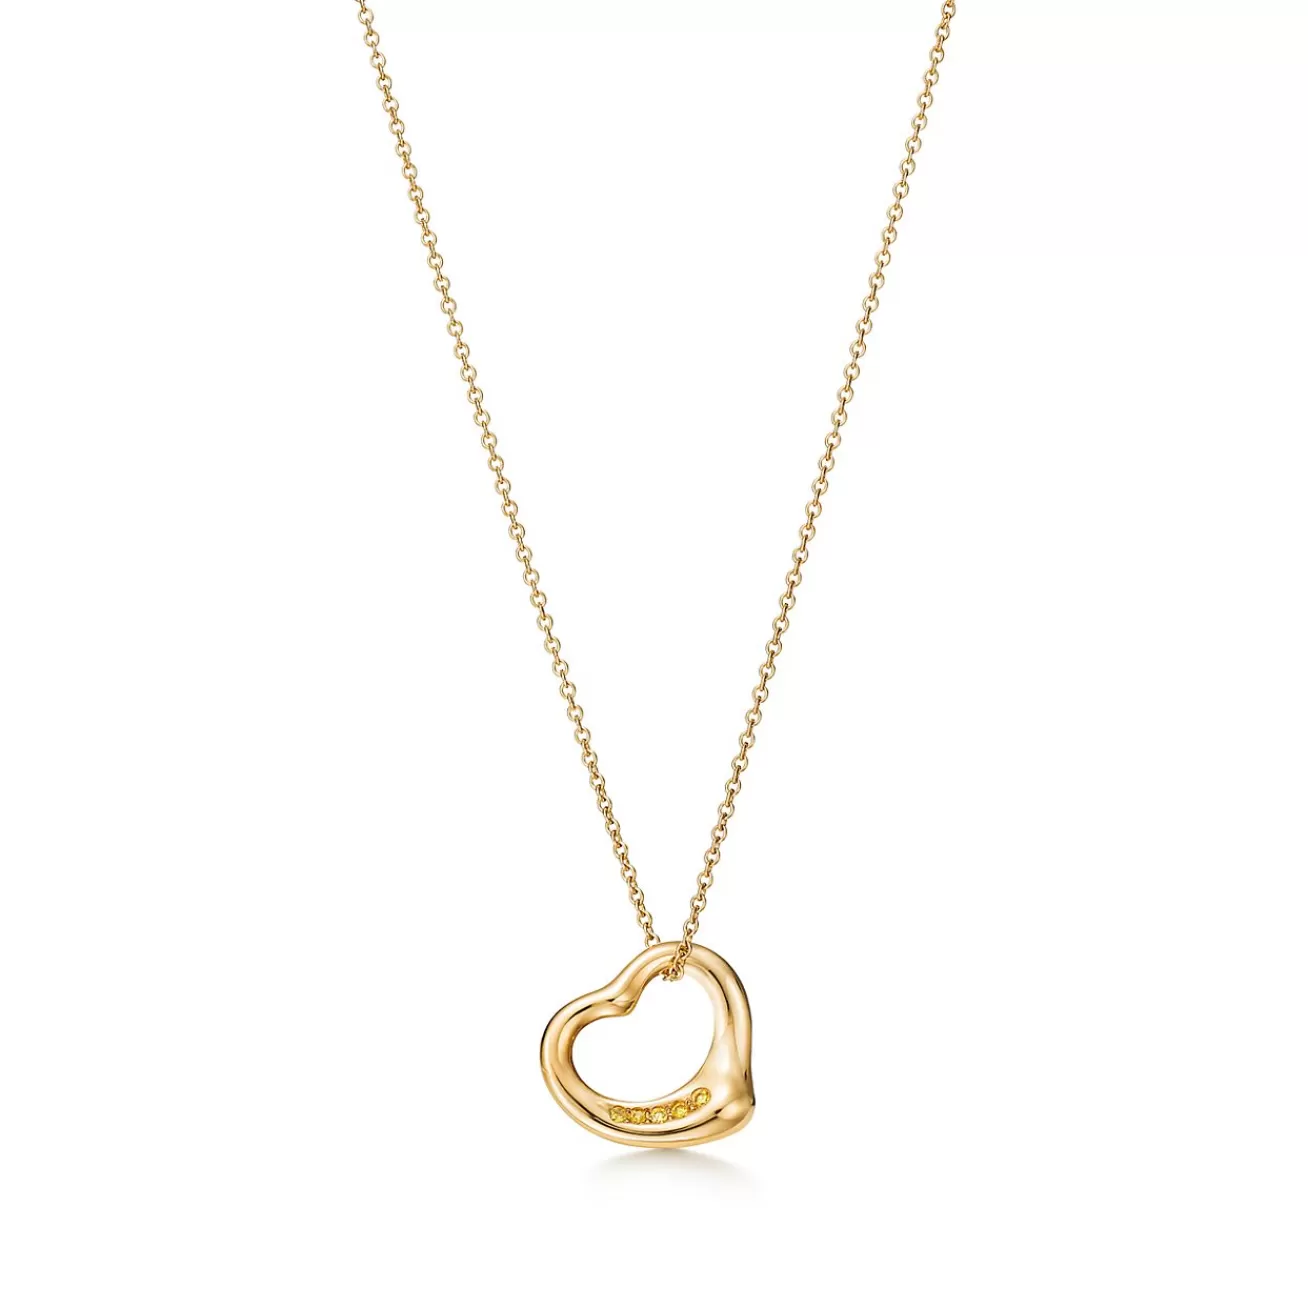 Tiffany & Co. Elsa Peretti® Open Heart pendant in 18k gold with yellow diamonds. | ^ Necklaces & Pendants | Gold Jewelry